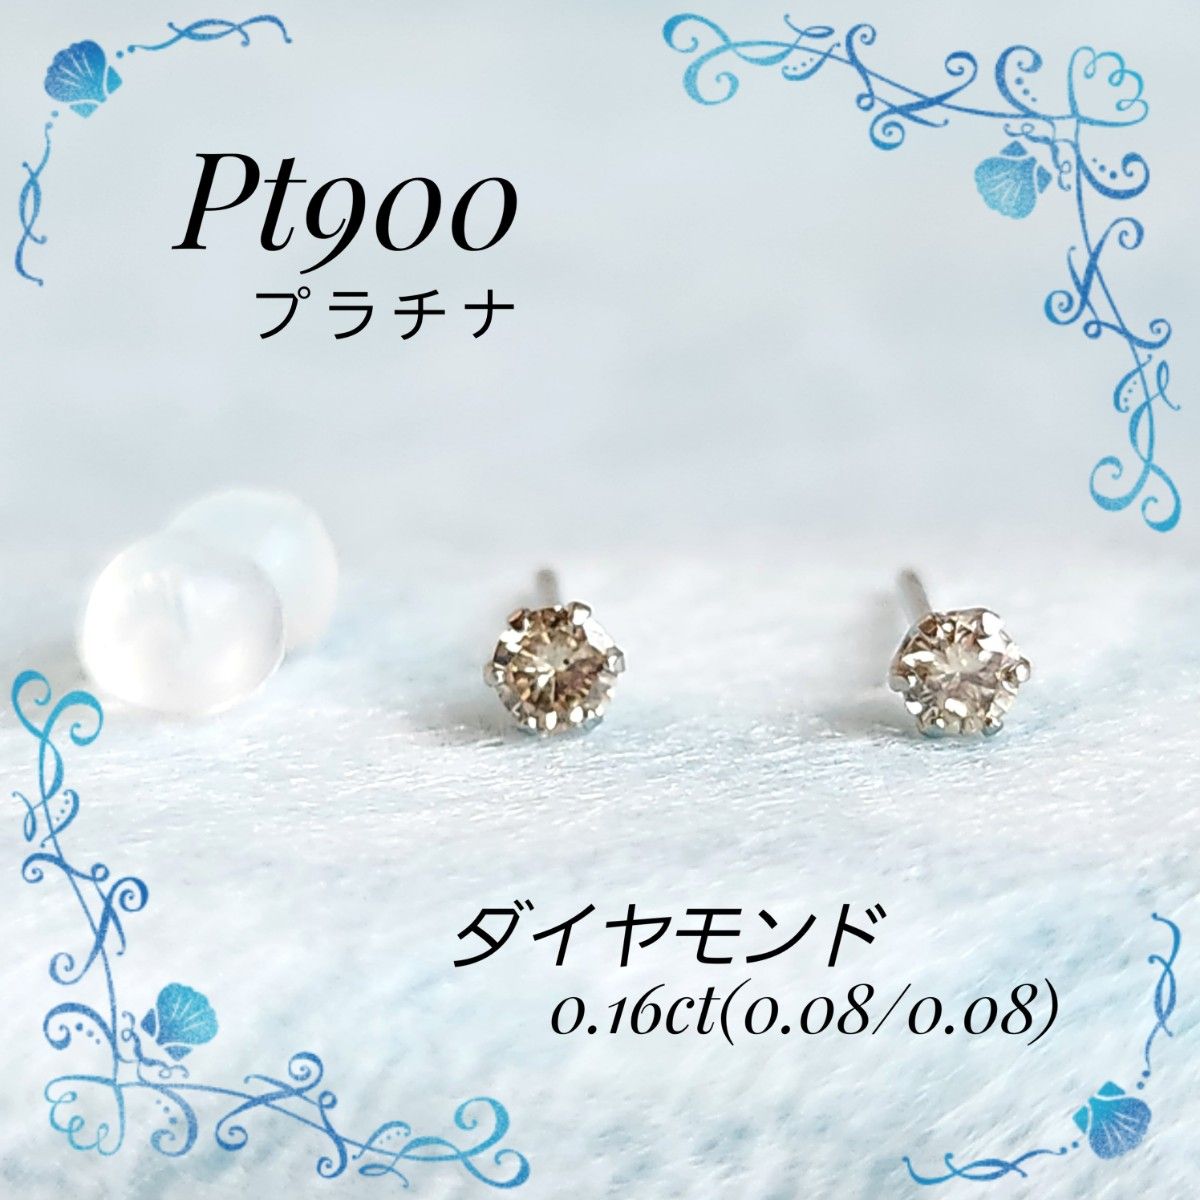 PT900 プラチナ ダイヤモンド 一粒ダイヤ スタッド ピアス 両耳用 一粒